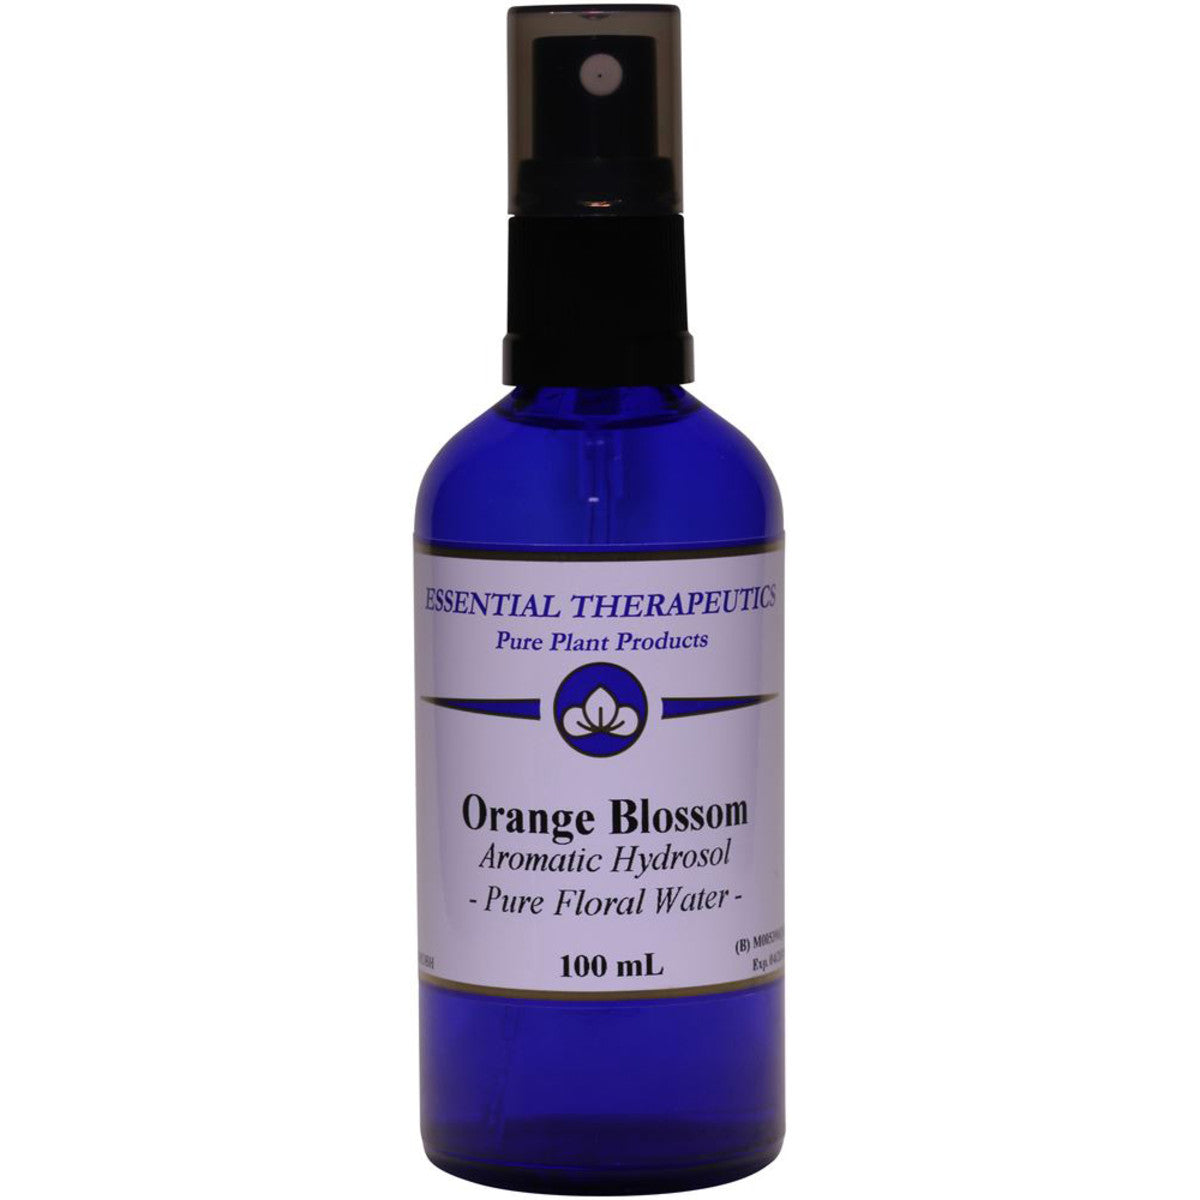 Essential Therapeutic - Aromatic Hydrosol Orange Blossom